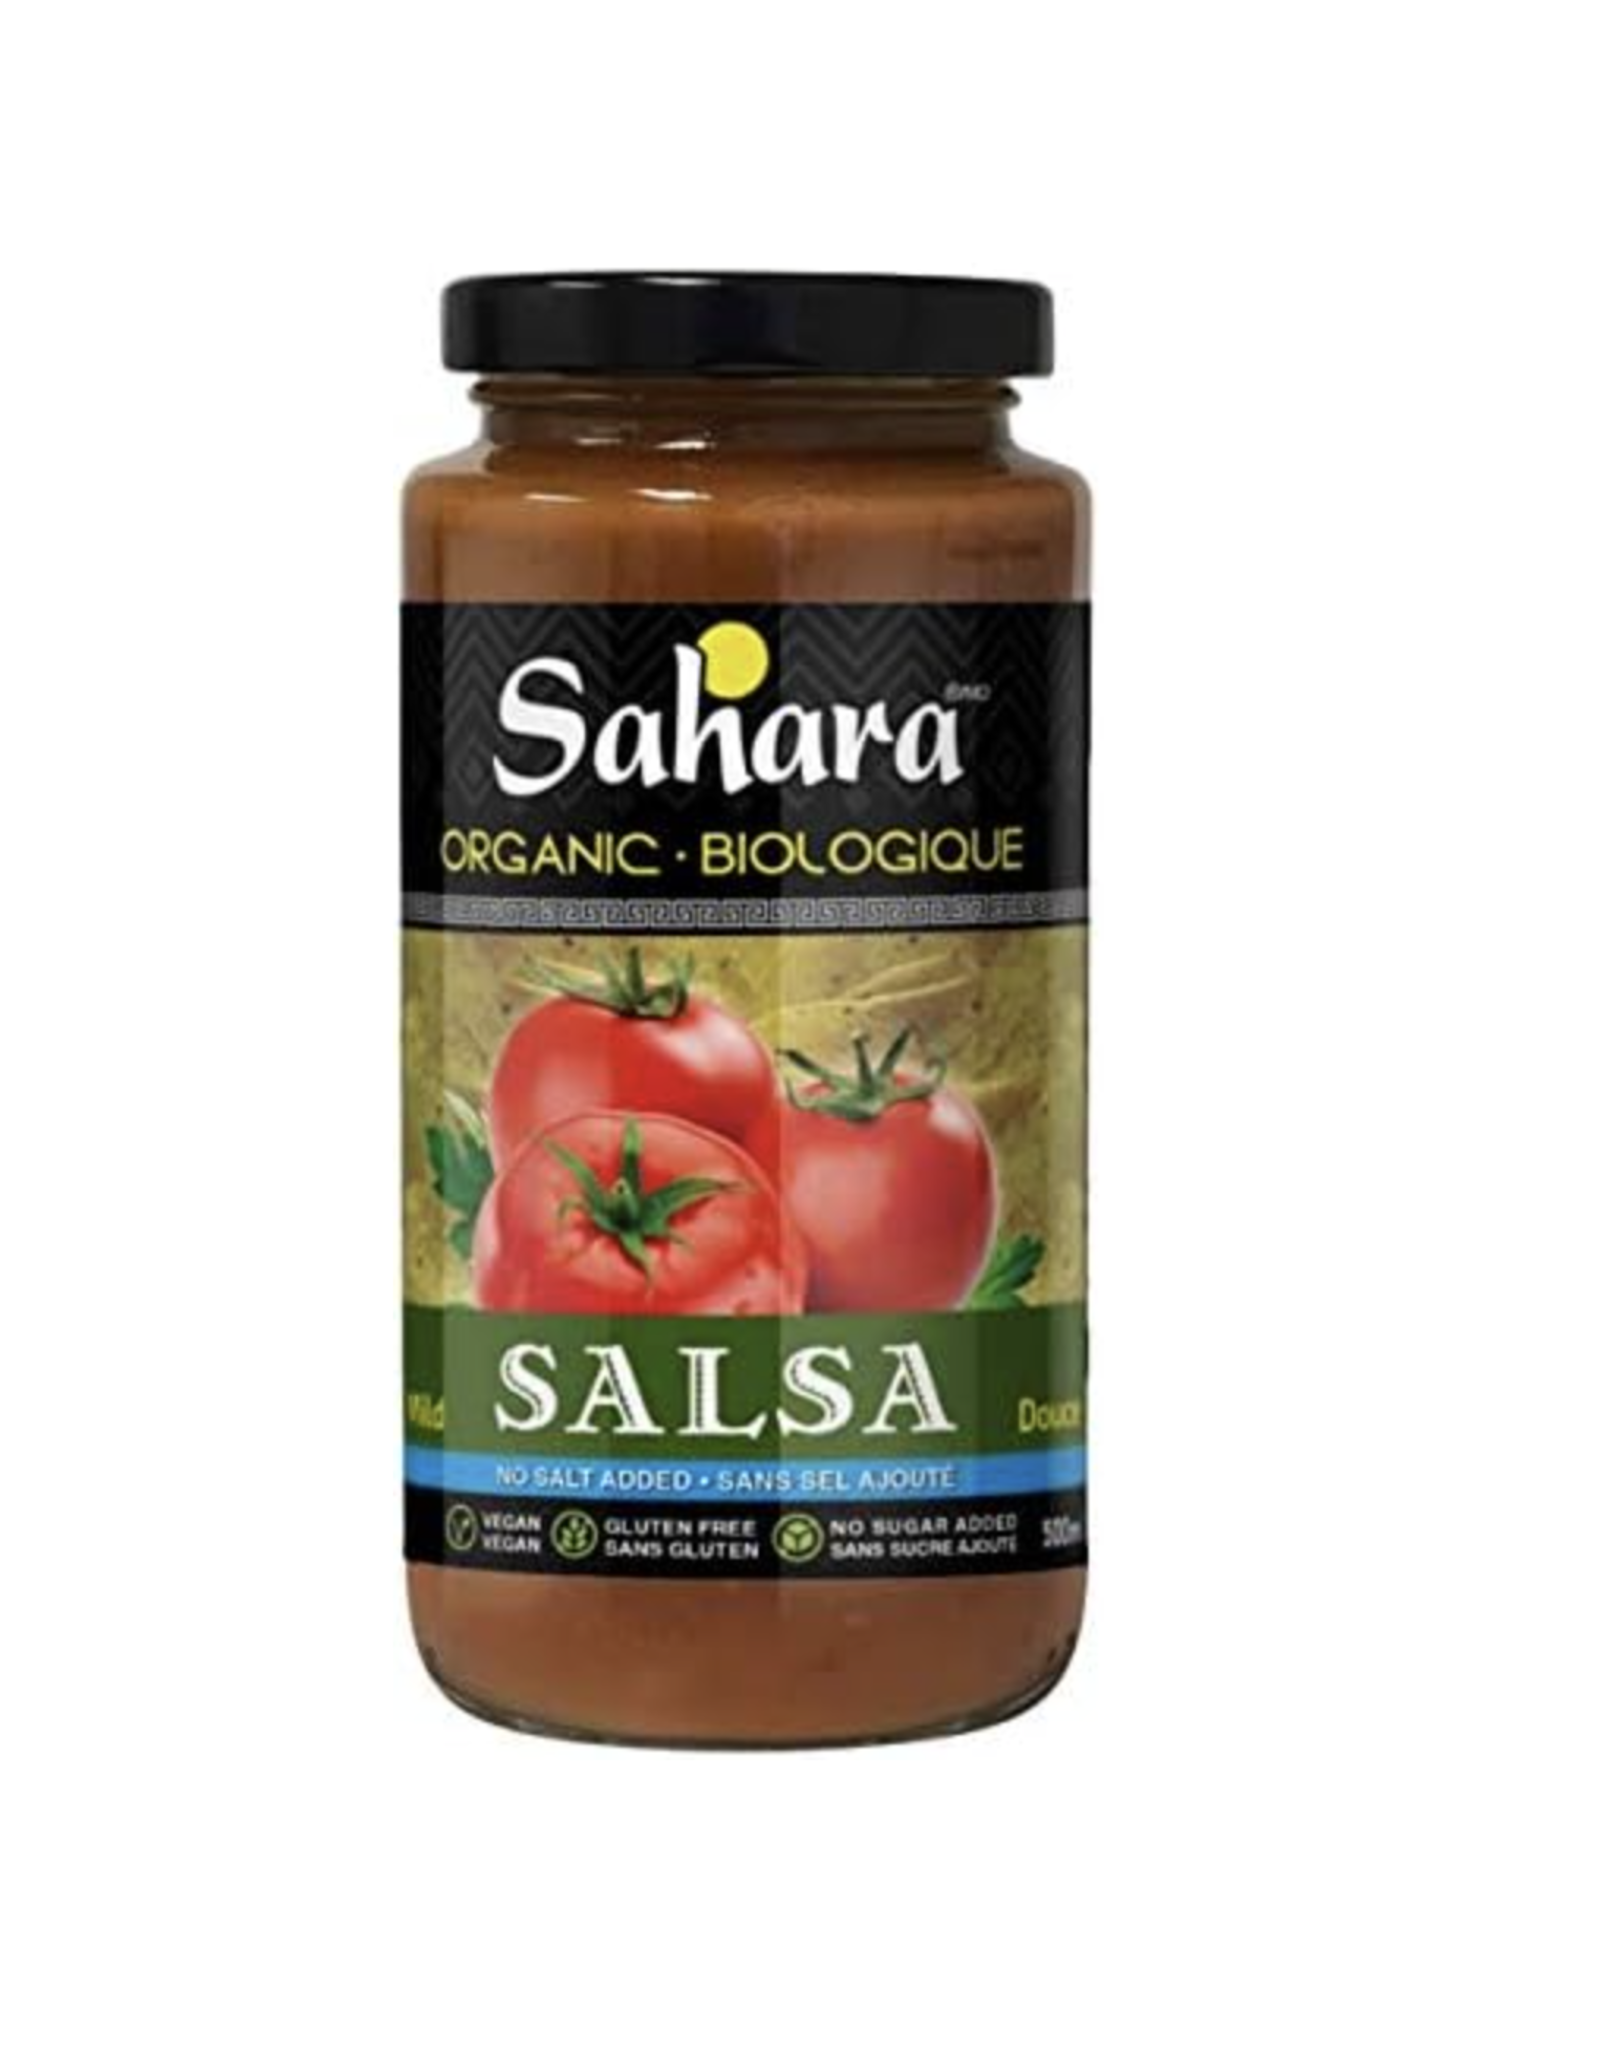 Sahara Salsa Mild